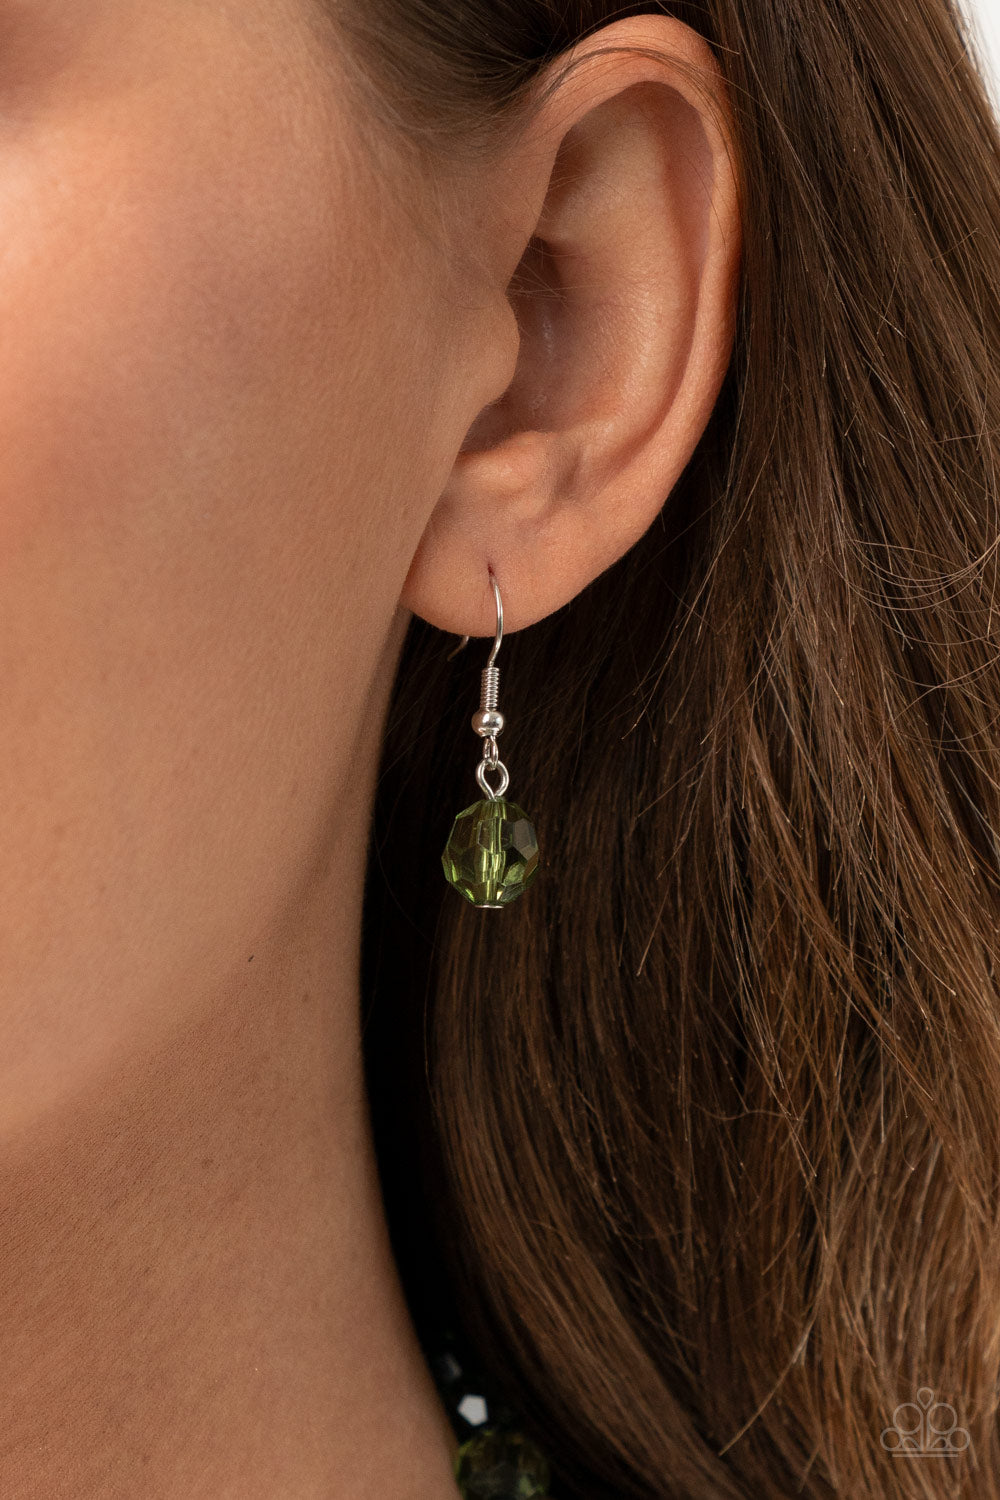 Paparazzi Accessories Malibu Masterpiece - Green Necklaces - Lady T Accessories